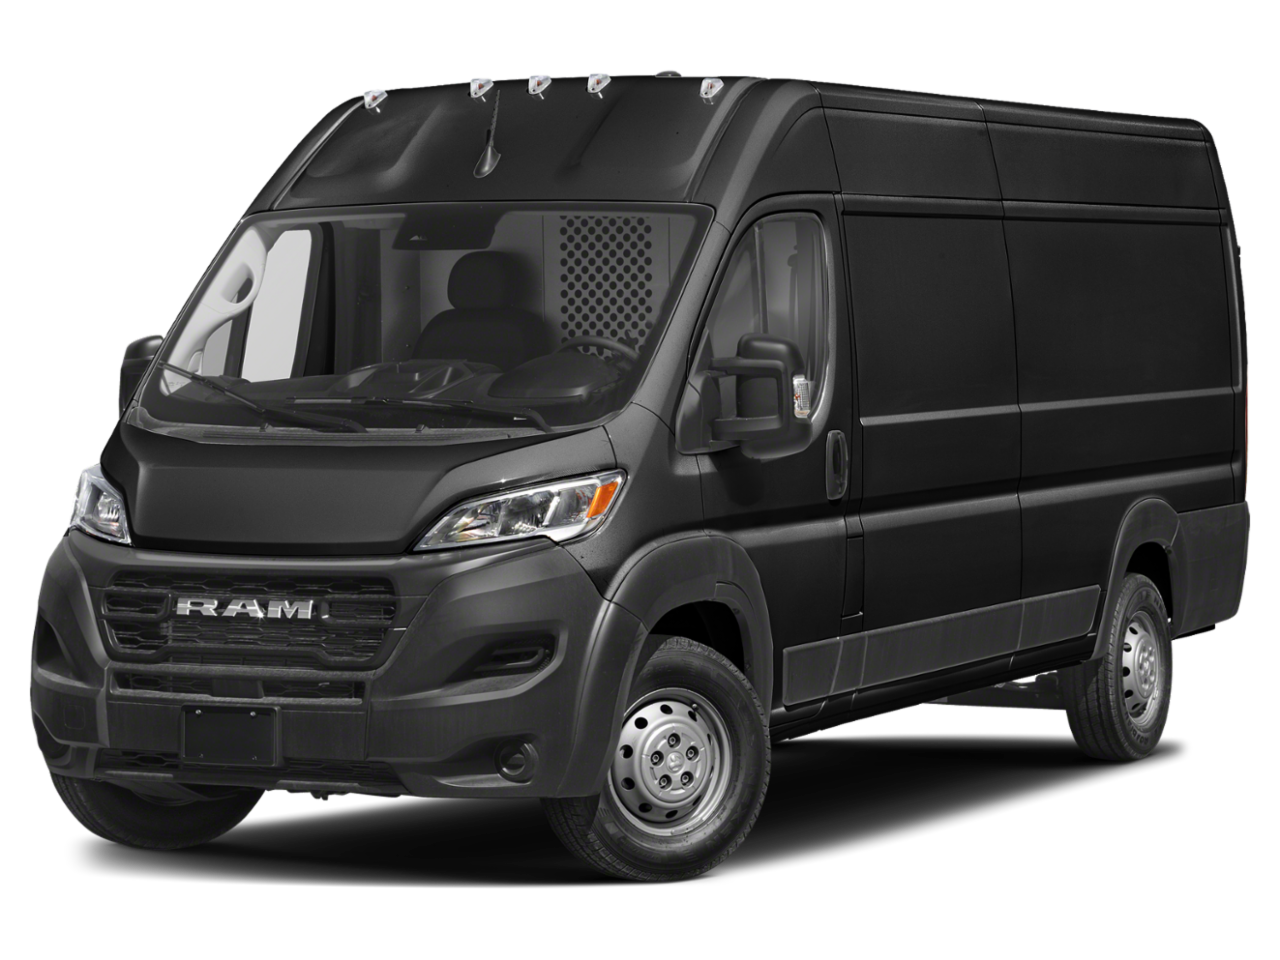 New Ram ProMaster Cargo Van from your Seymour, IN dealership, Bob Poynter.